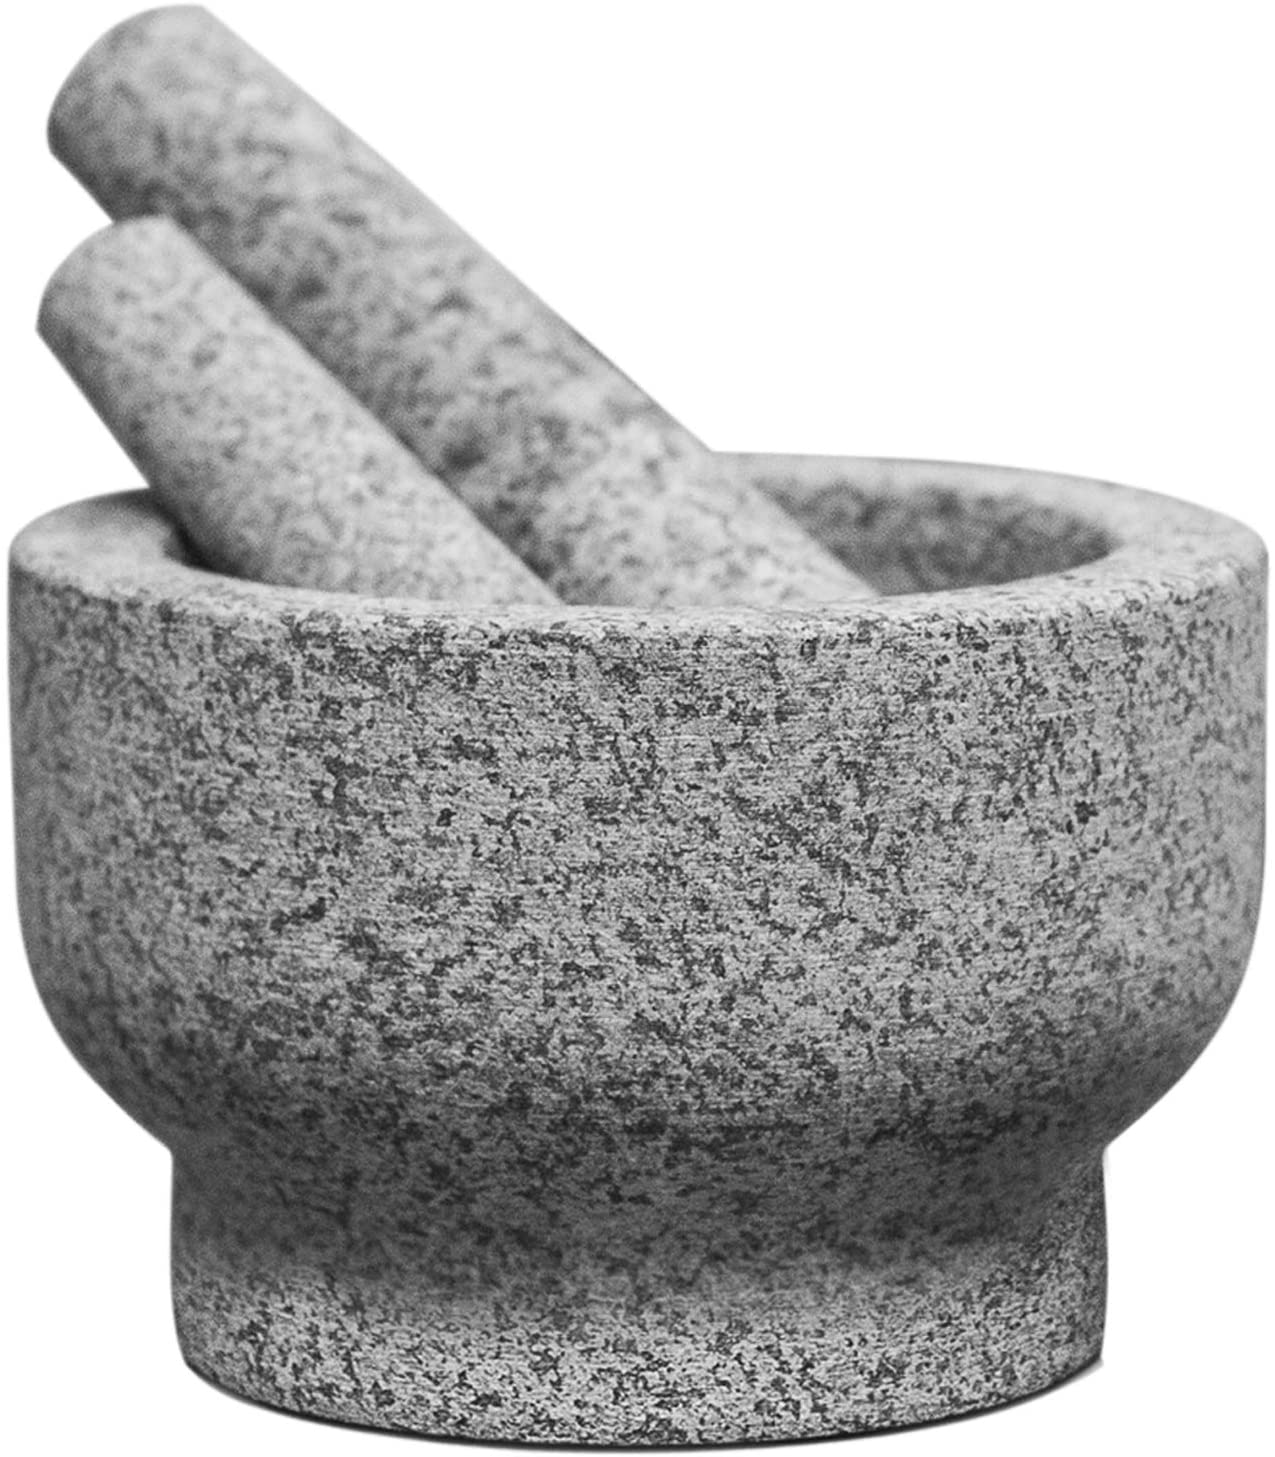 White Granite Mortar & Pestle Natural Stone Grinder for Spices